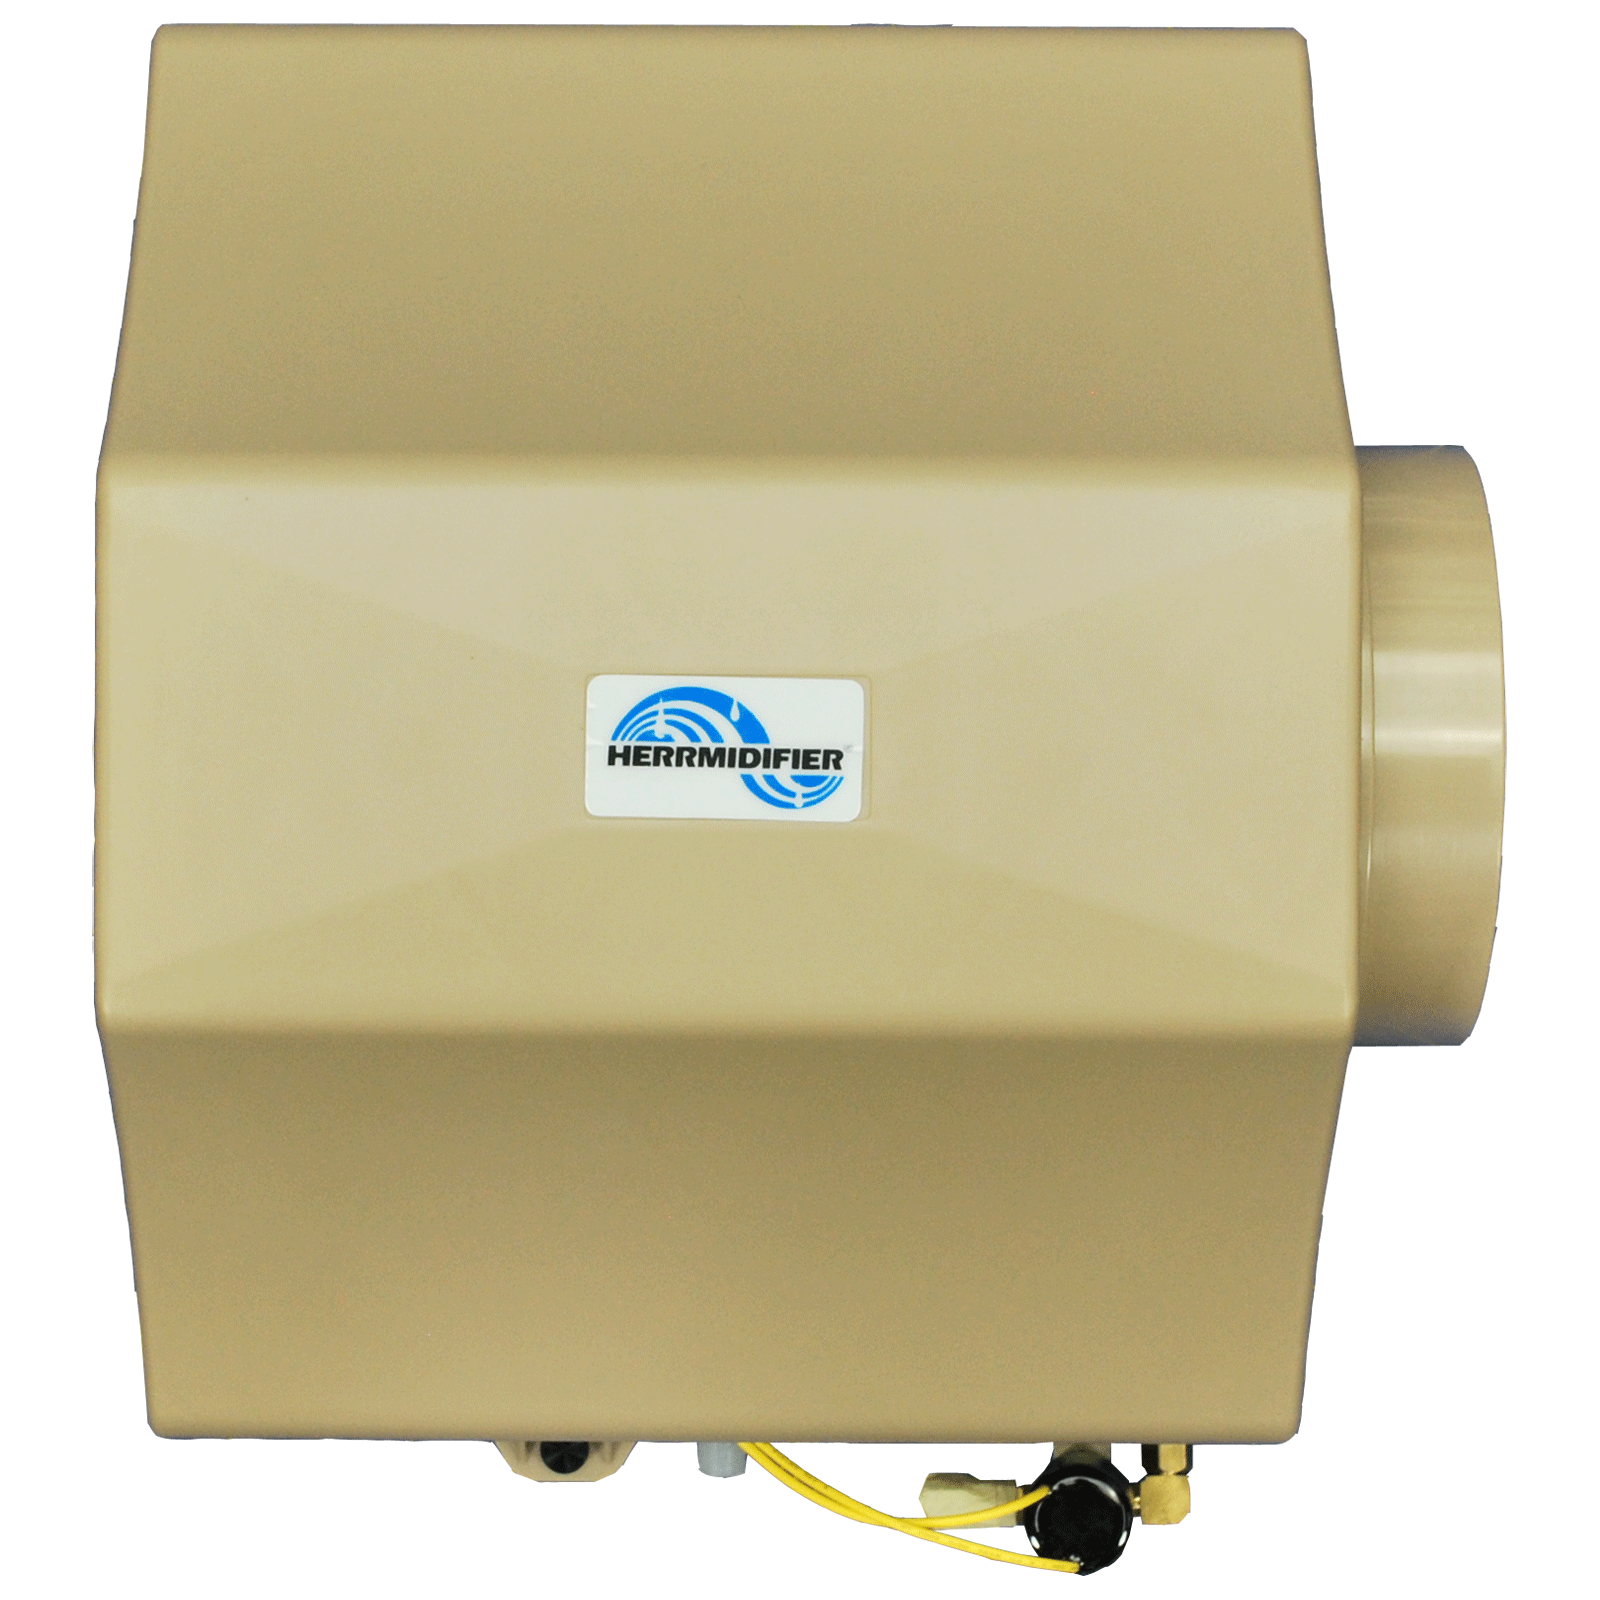 Herrmidifier G-300 Bypass Style Humidifier